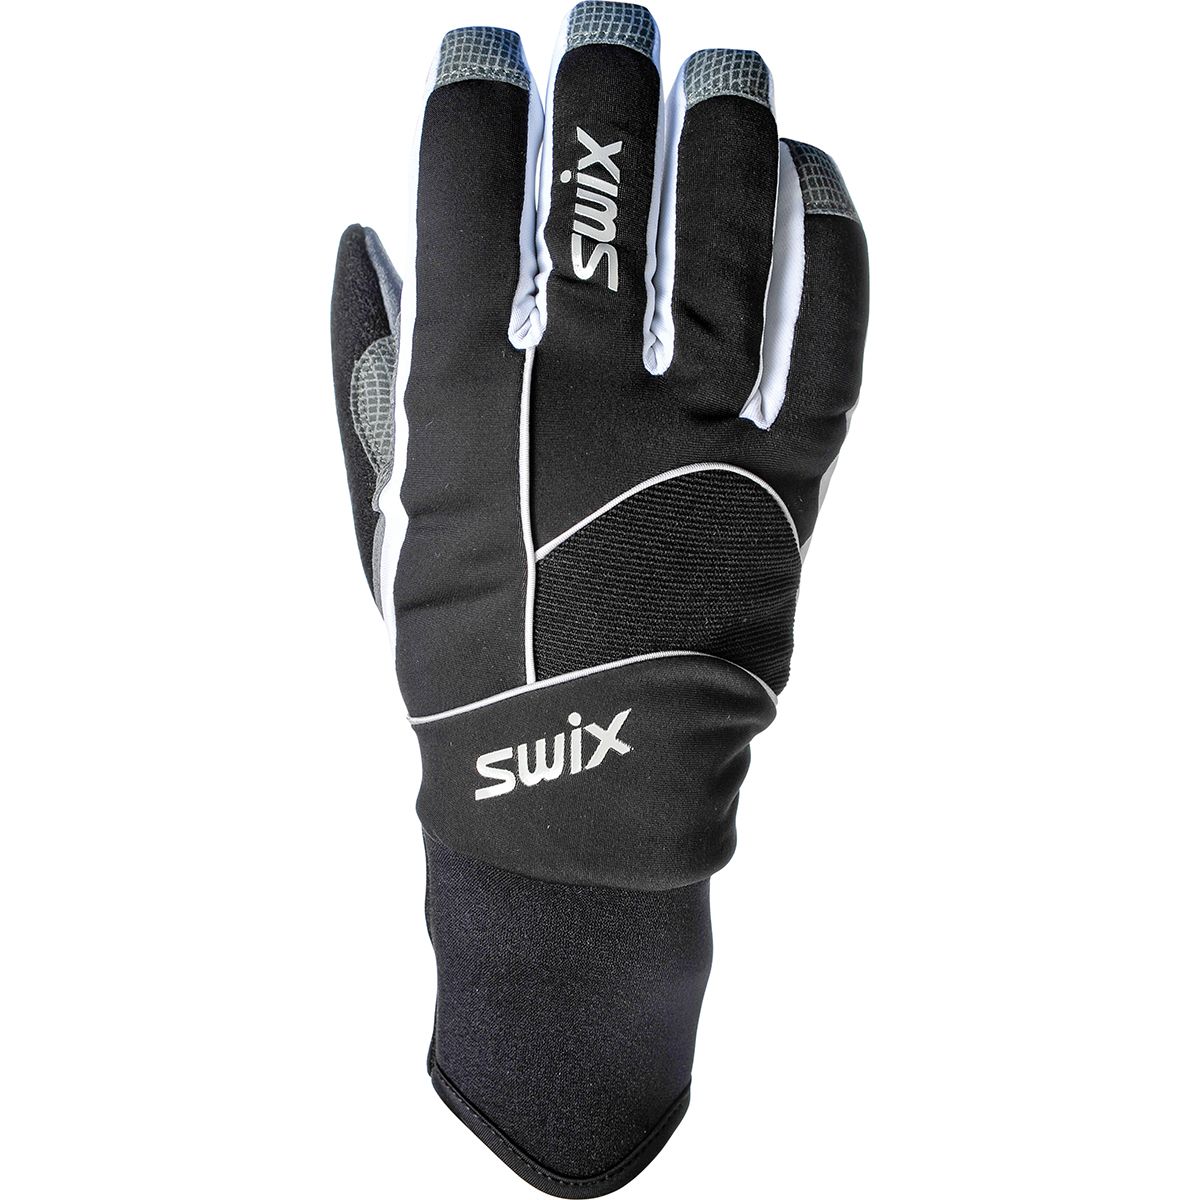 Swix Star X 2.0 Glove - Women's